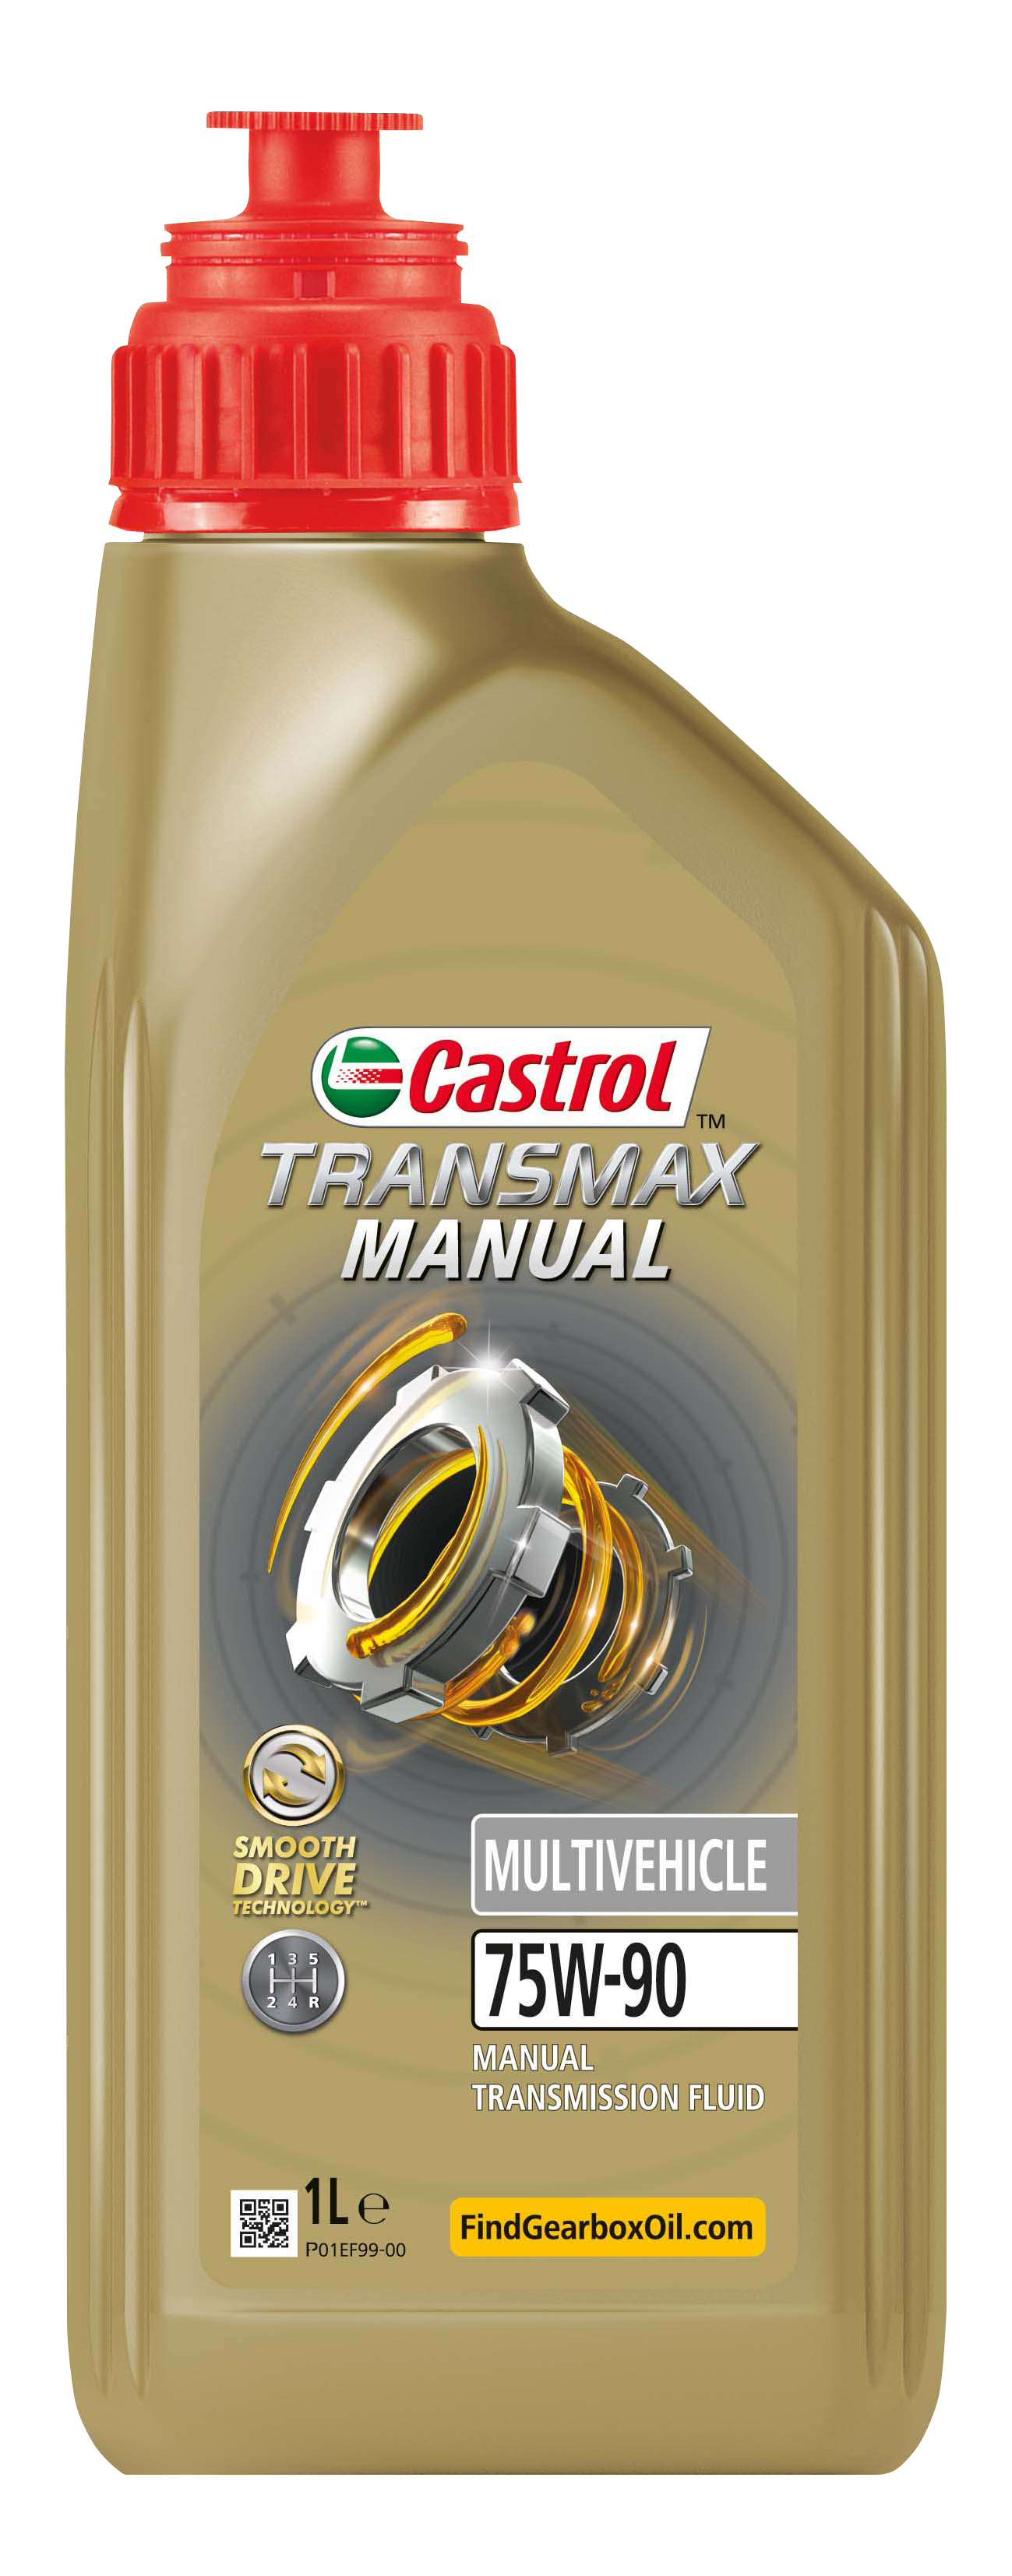 Váltóolaj 75W-90 1L Castrol Transmax Manual Multivehicle